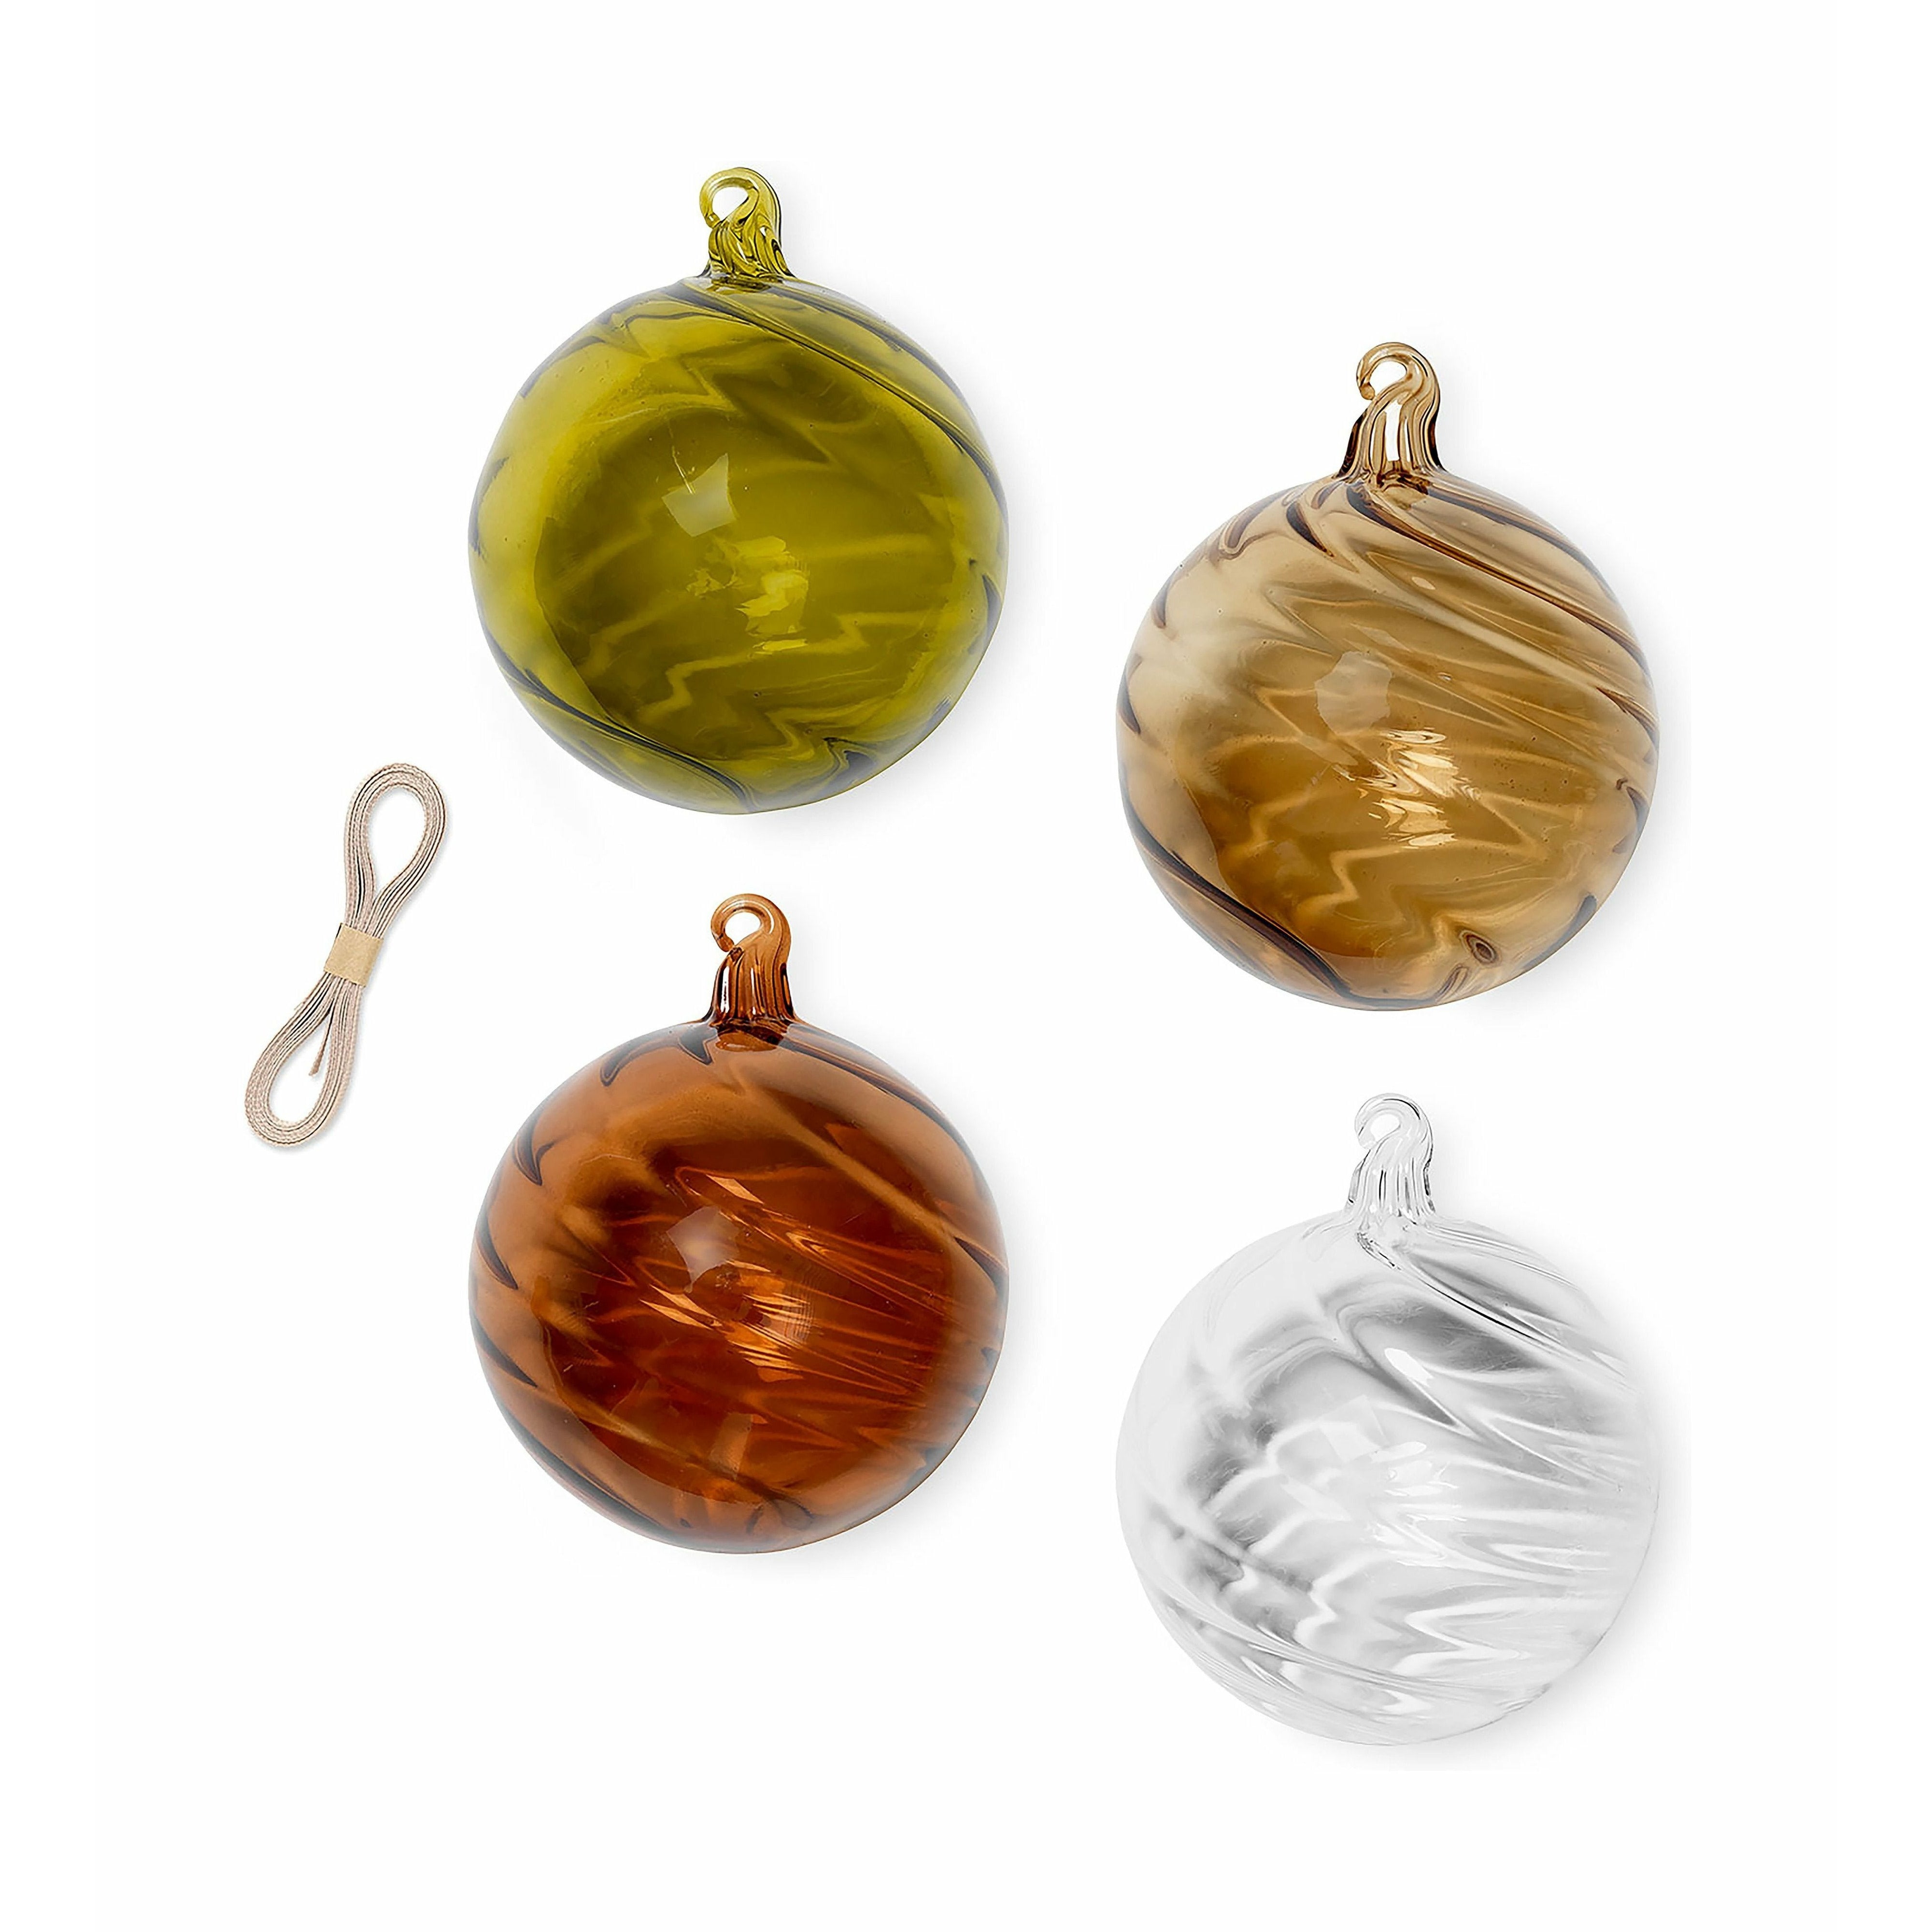 Ferm Living Twirl ornamenten set van 4, Øx H 10x11 cm